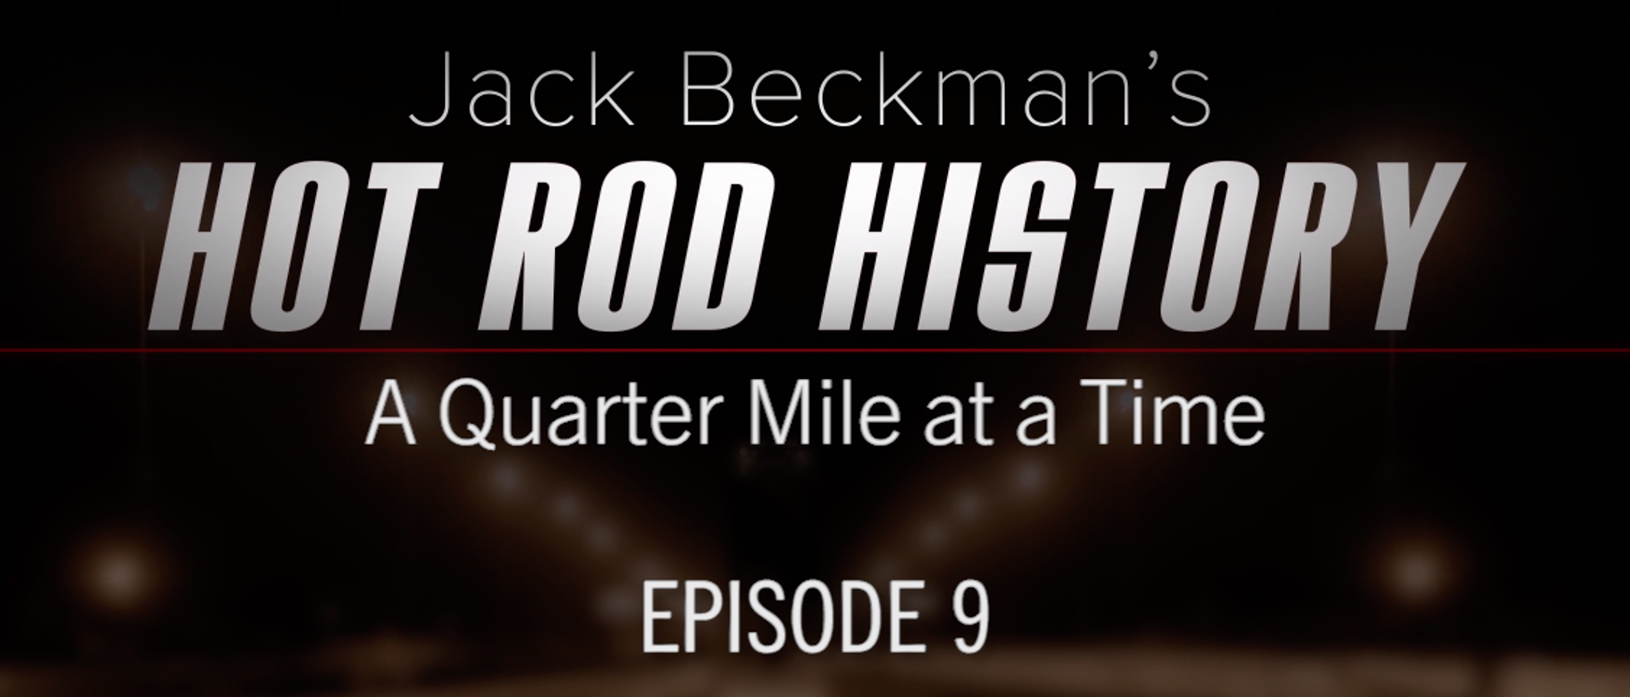 Jack Beckman’s Hot Rod History a Quarter-Mile at a Time – Episode 9